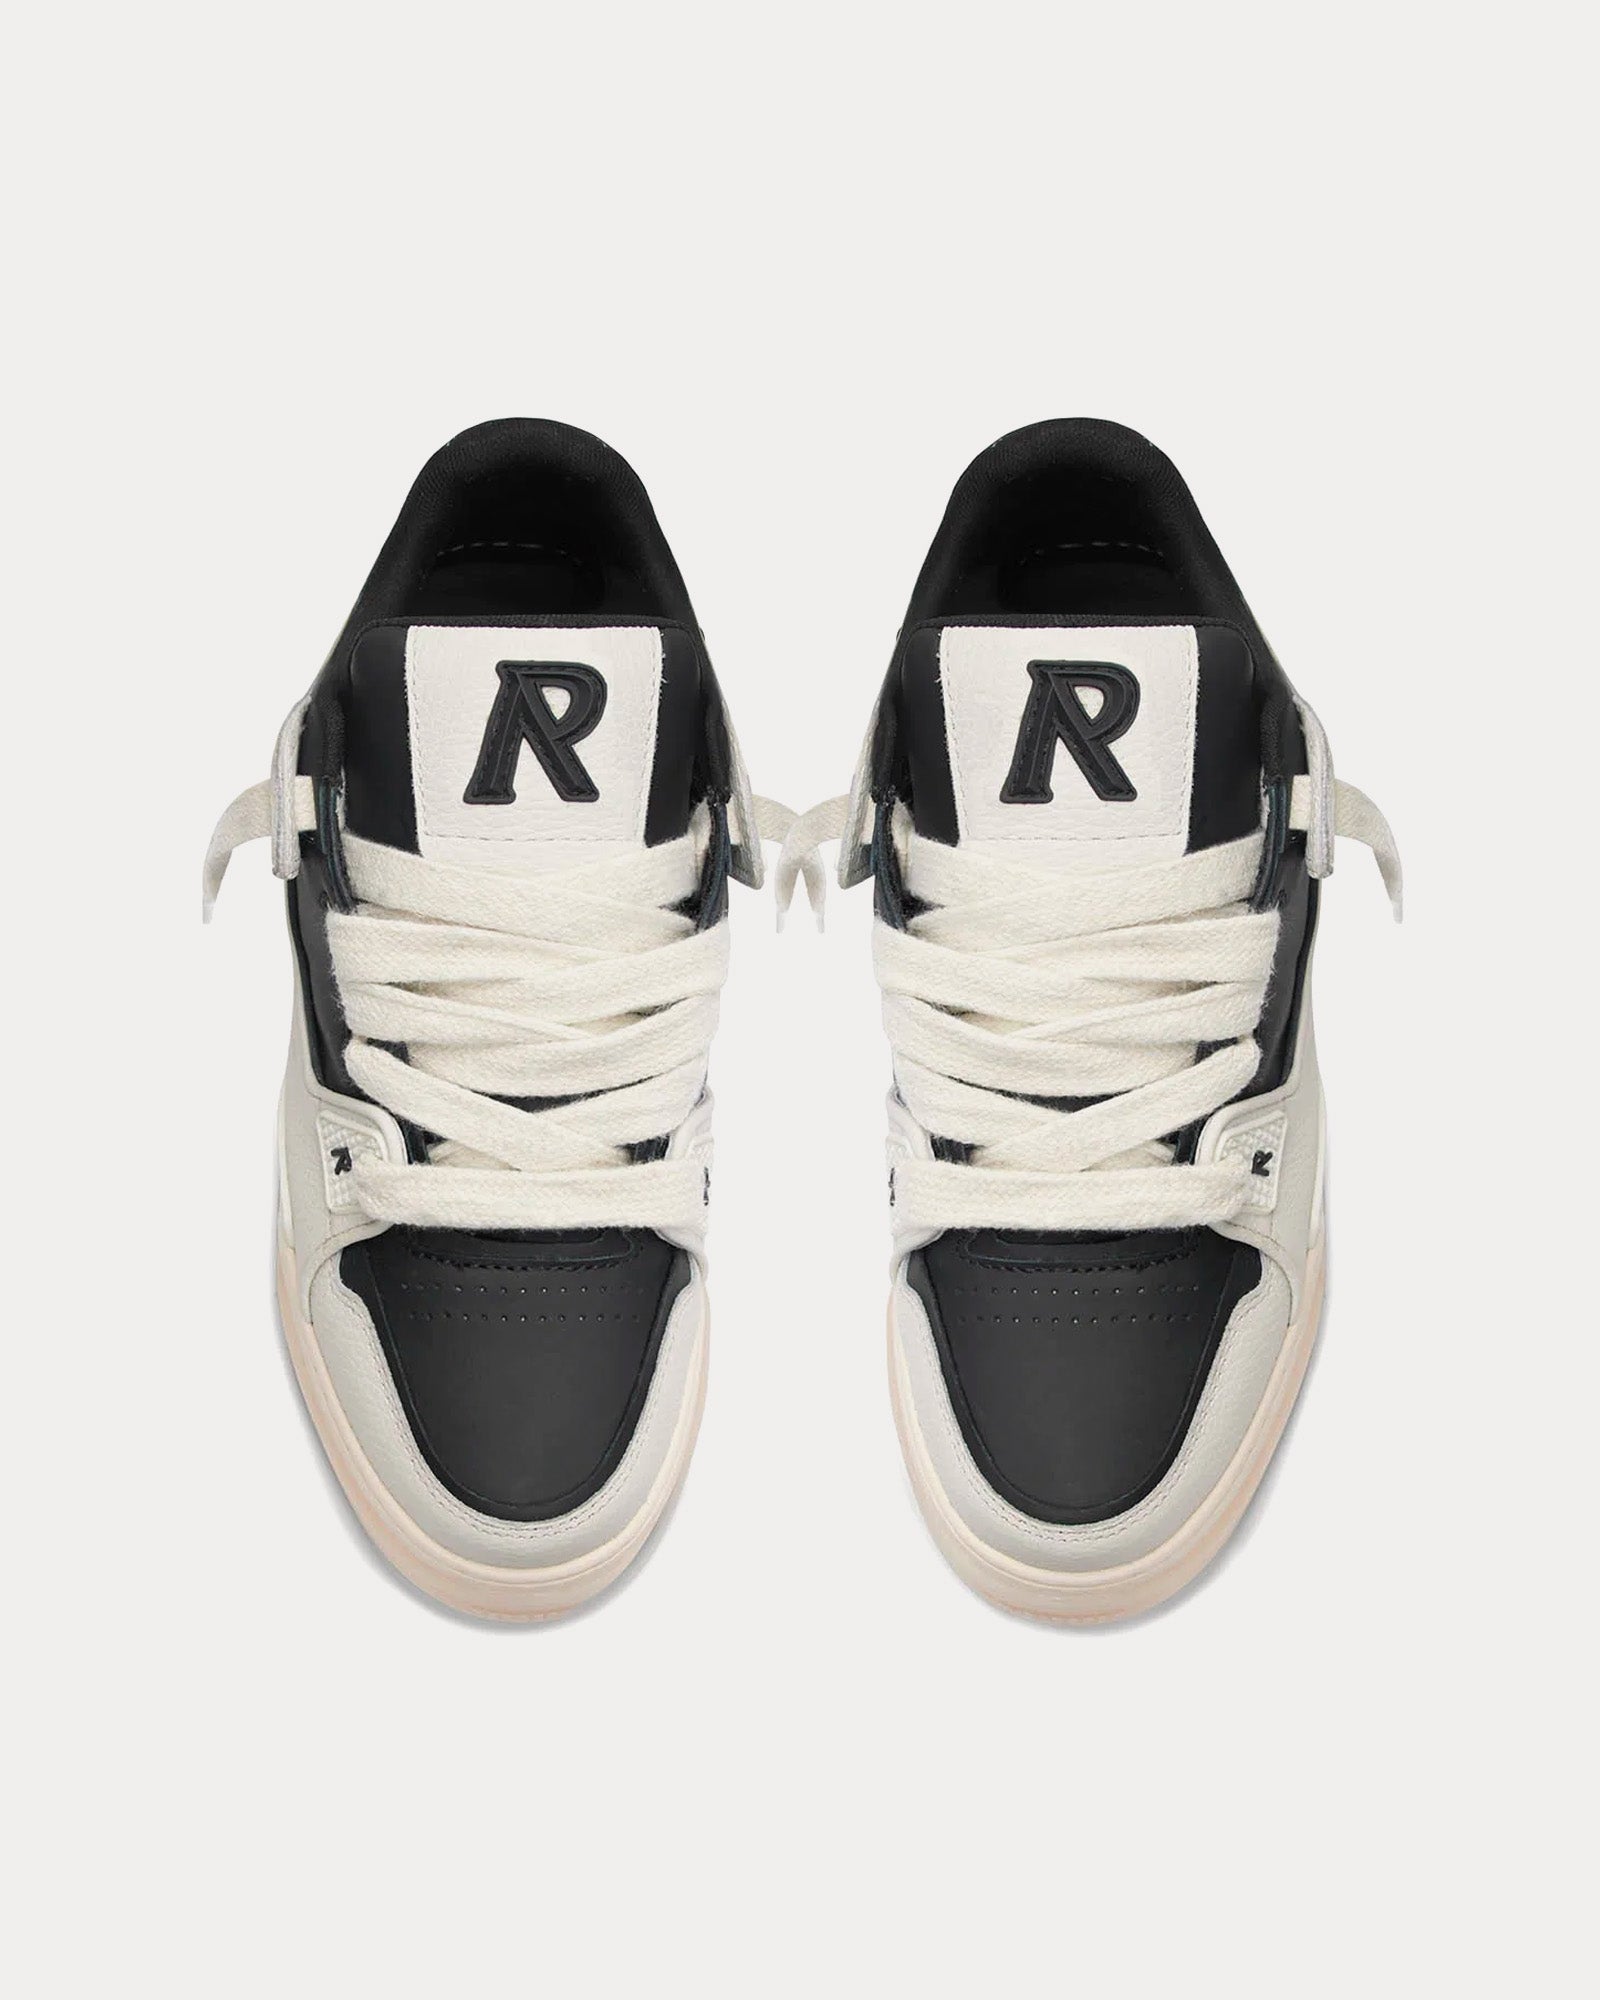 Represent - Studio Sneaker Vintage White / Black Low Top Sneakers